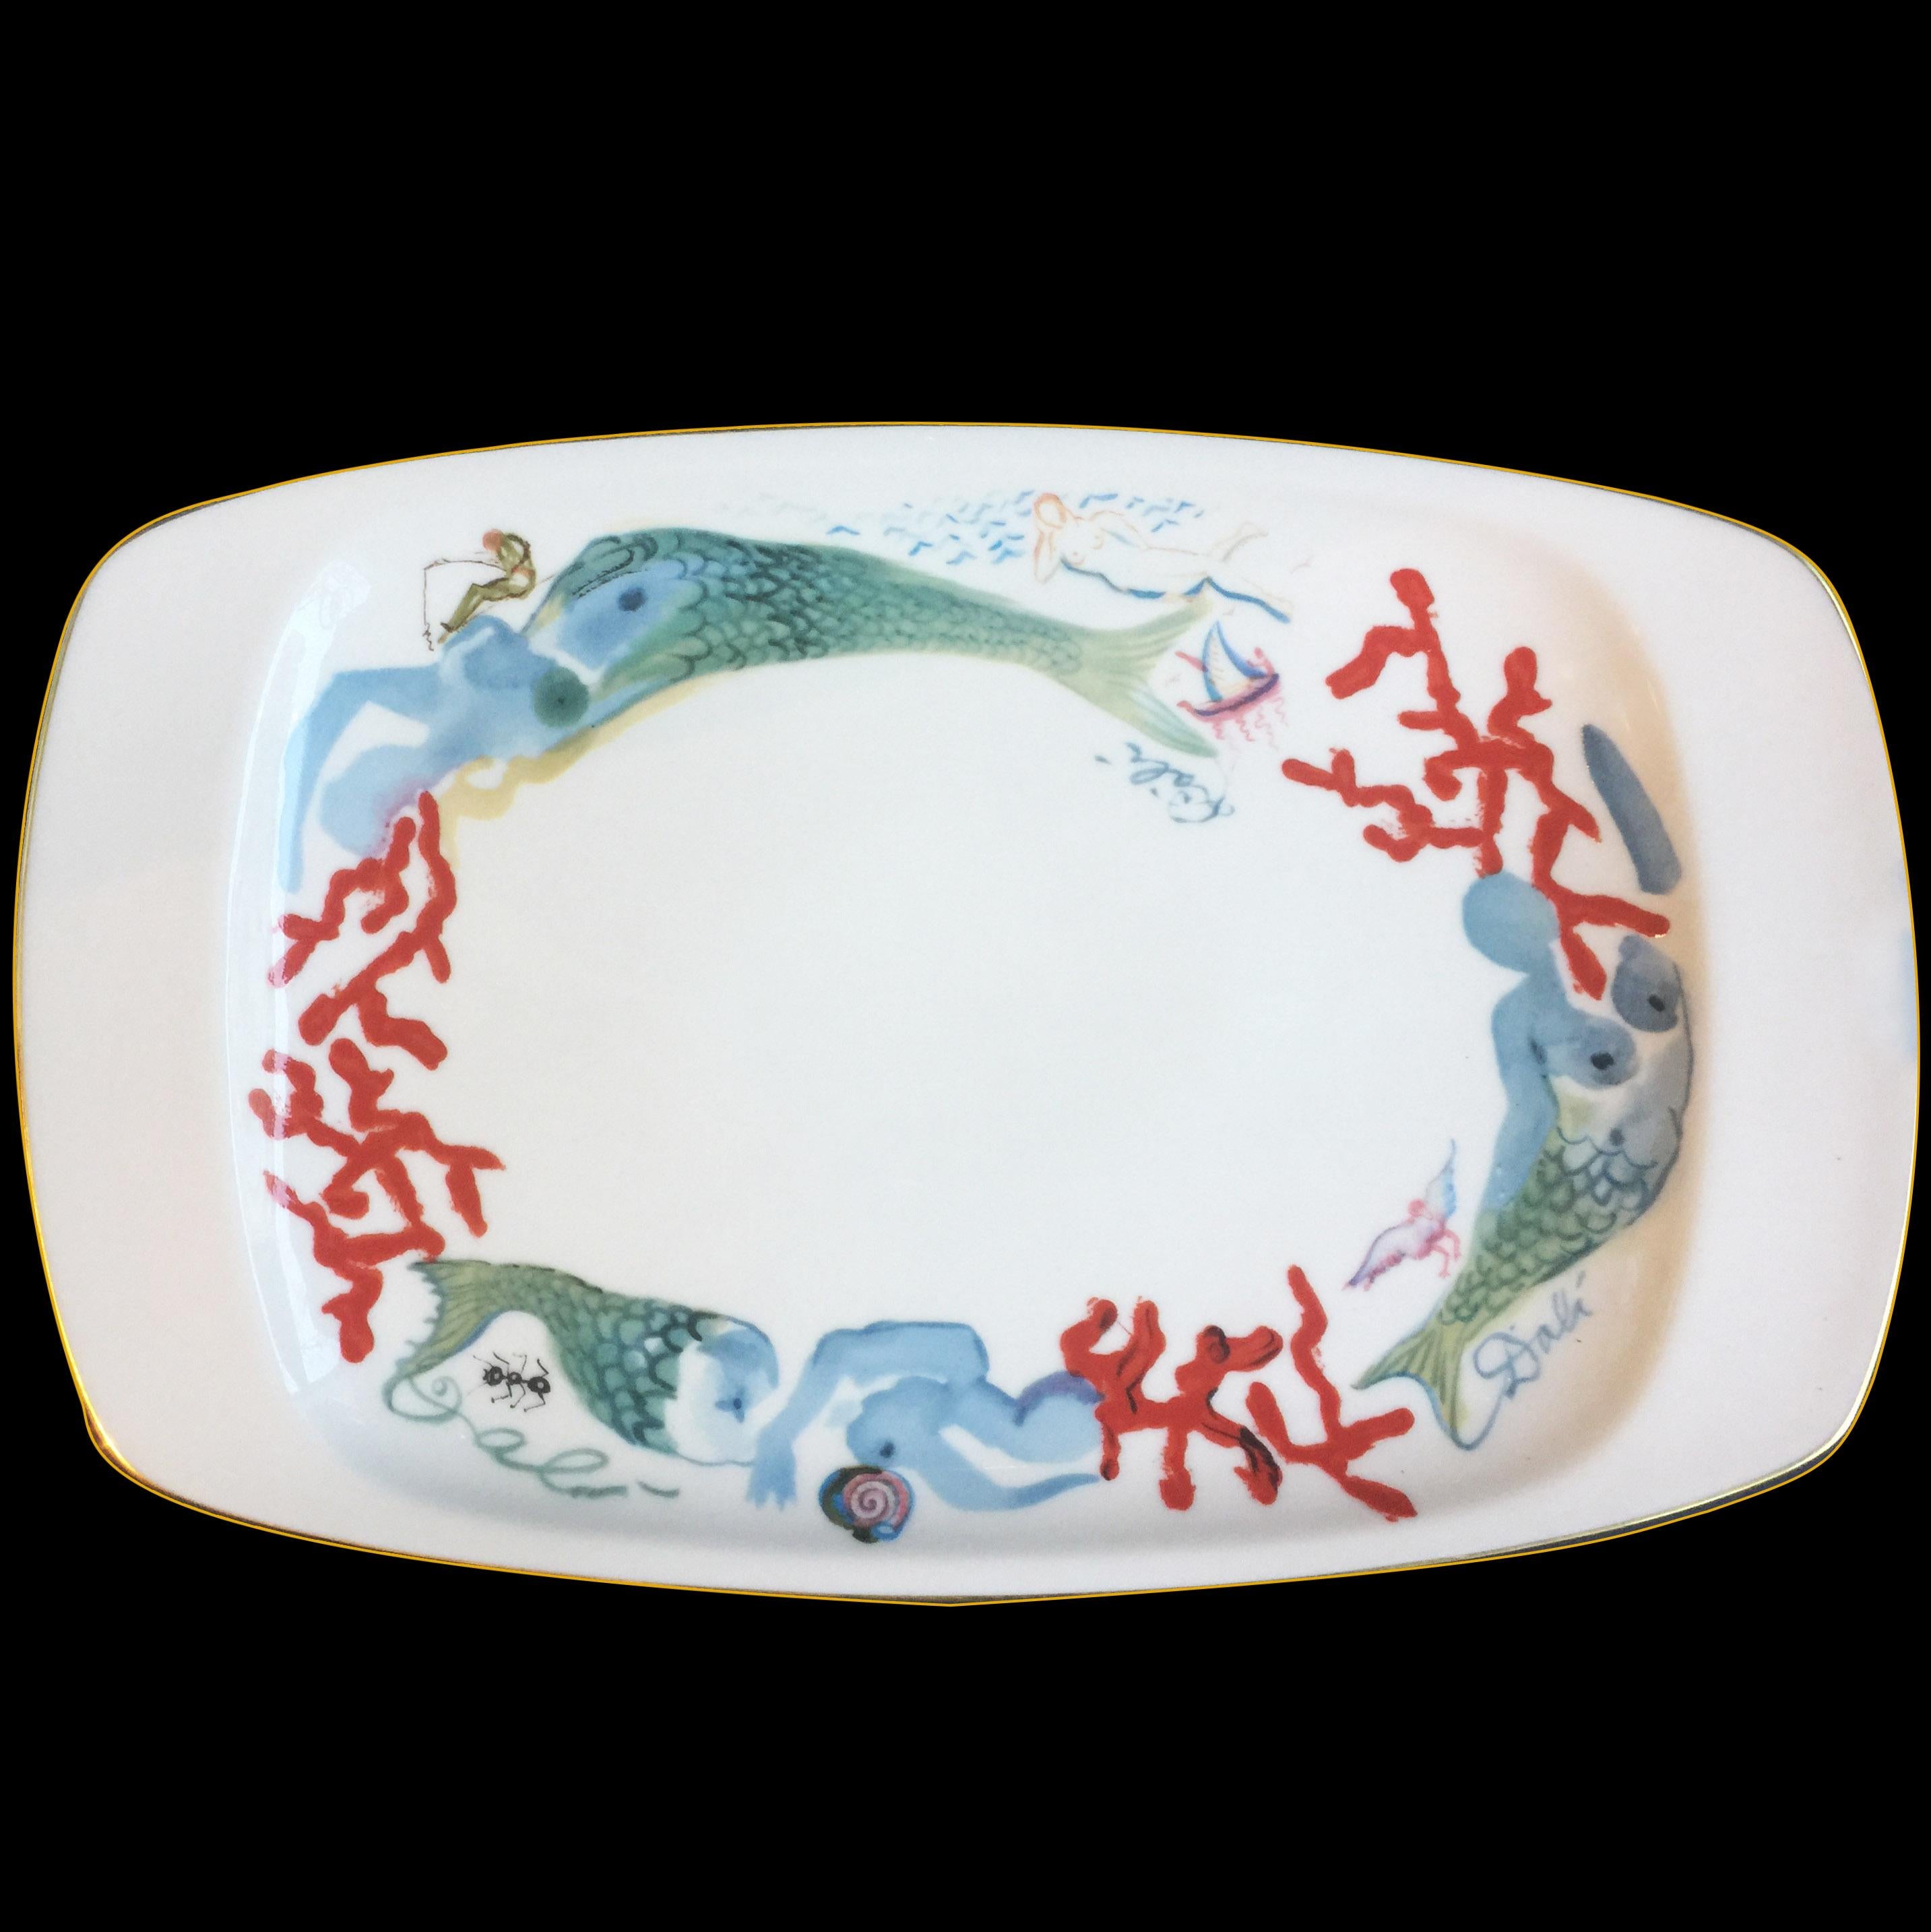 Salvador Dali Service Porcelain over 100 pieces limited edition 1977  1